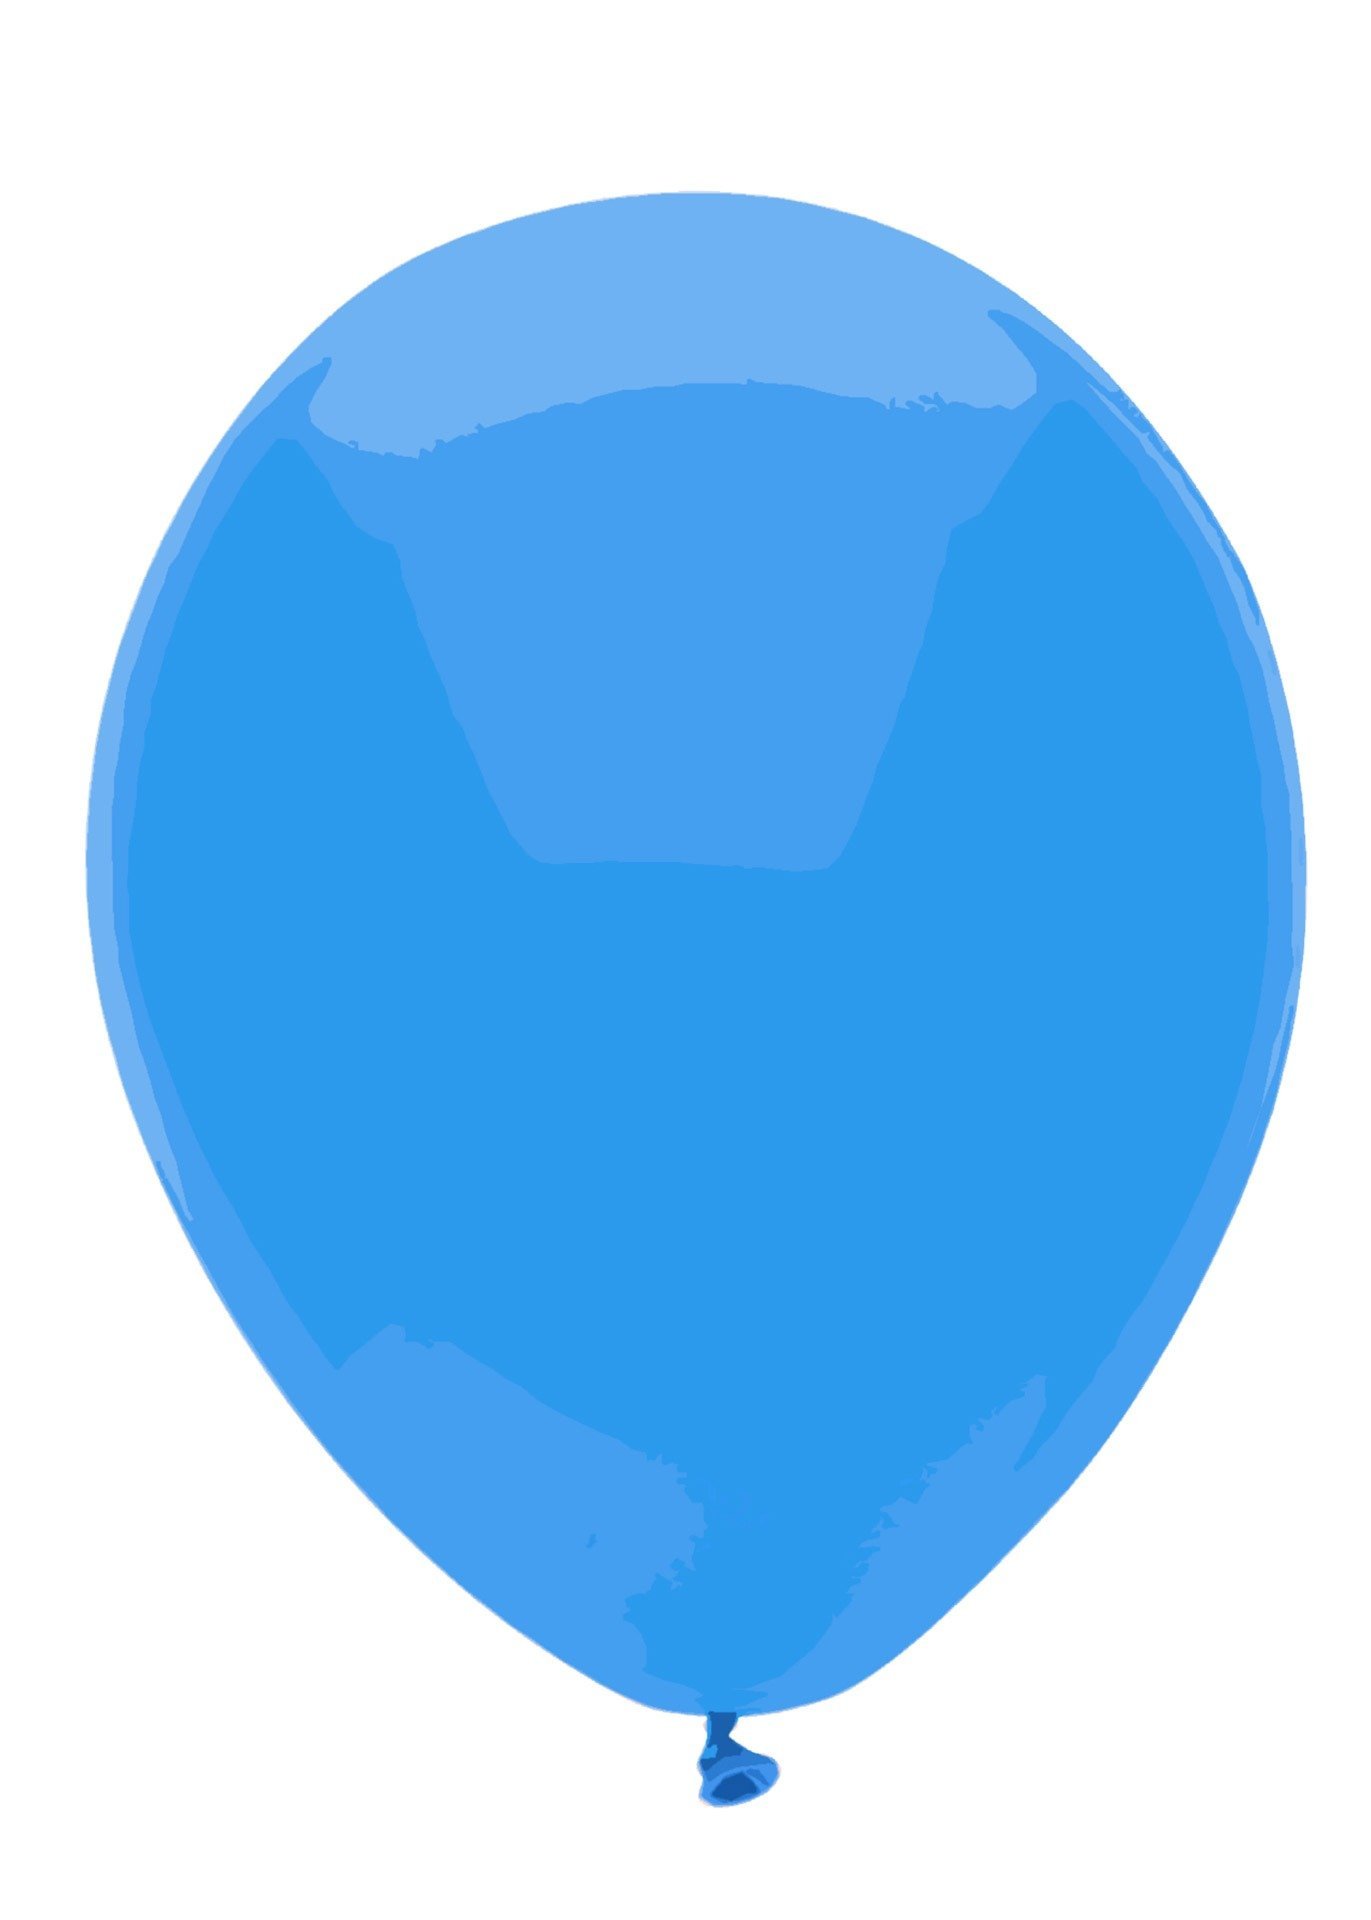 Картинка шар на прозрачном фоне. Синий воздушный шар. Голубой шарик. Нарик воздушний голубой. Голубой воздушный шарик.